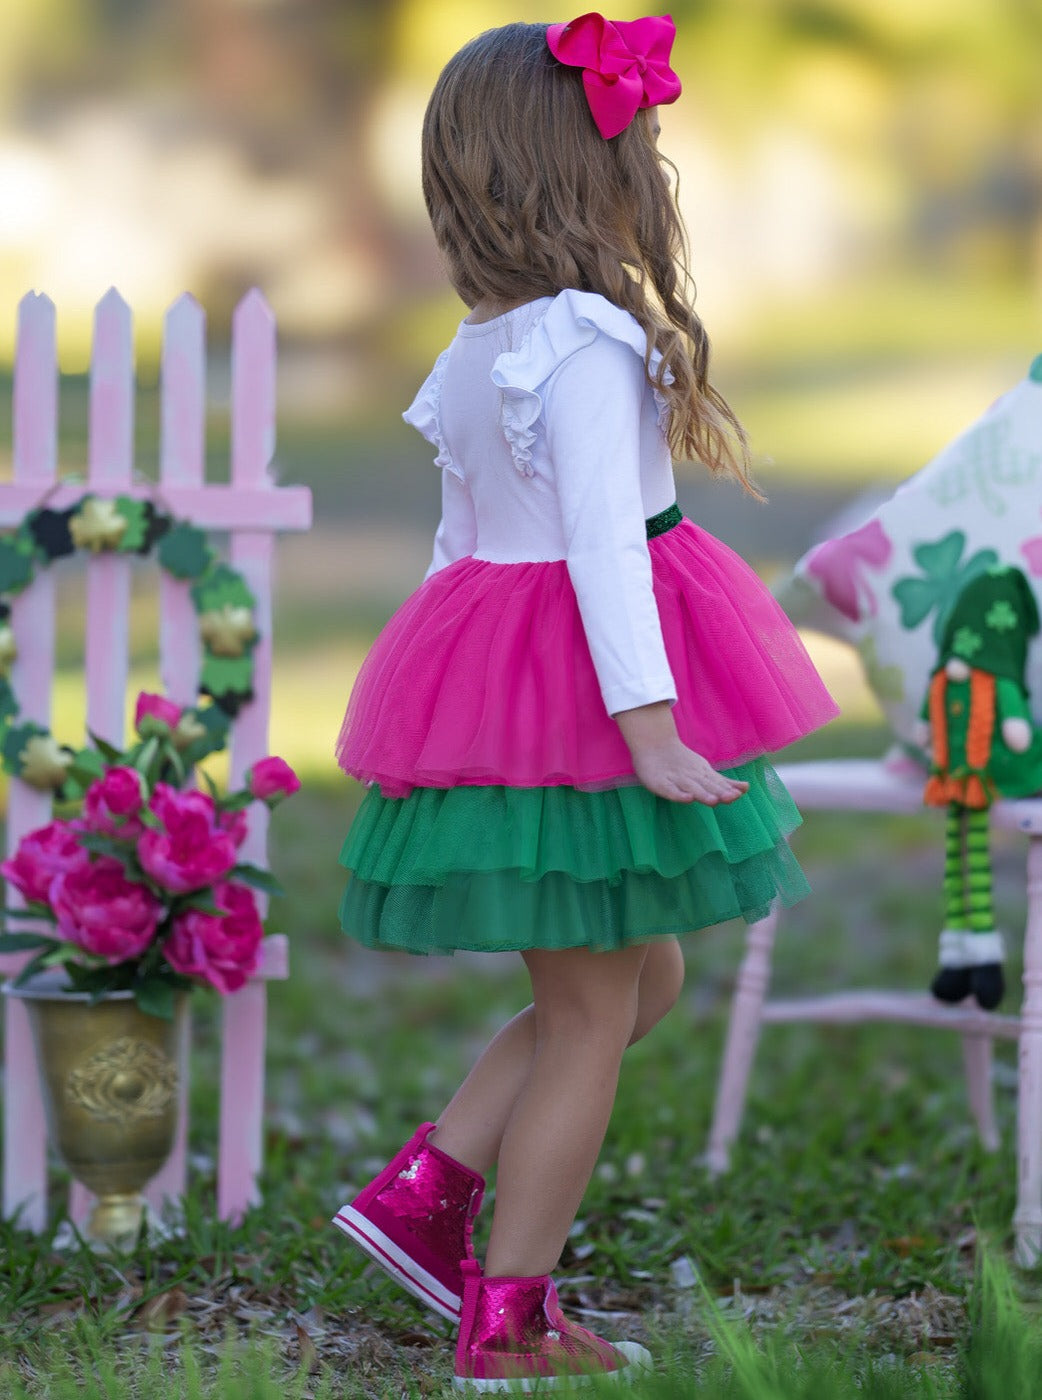 Mia Belle Girls Shamrock Tutu Dress | Girls St. Patrick's Day Dresses